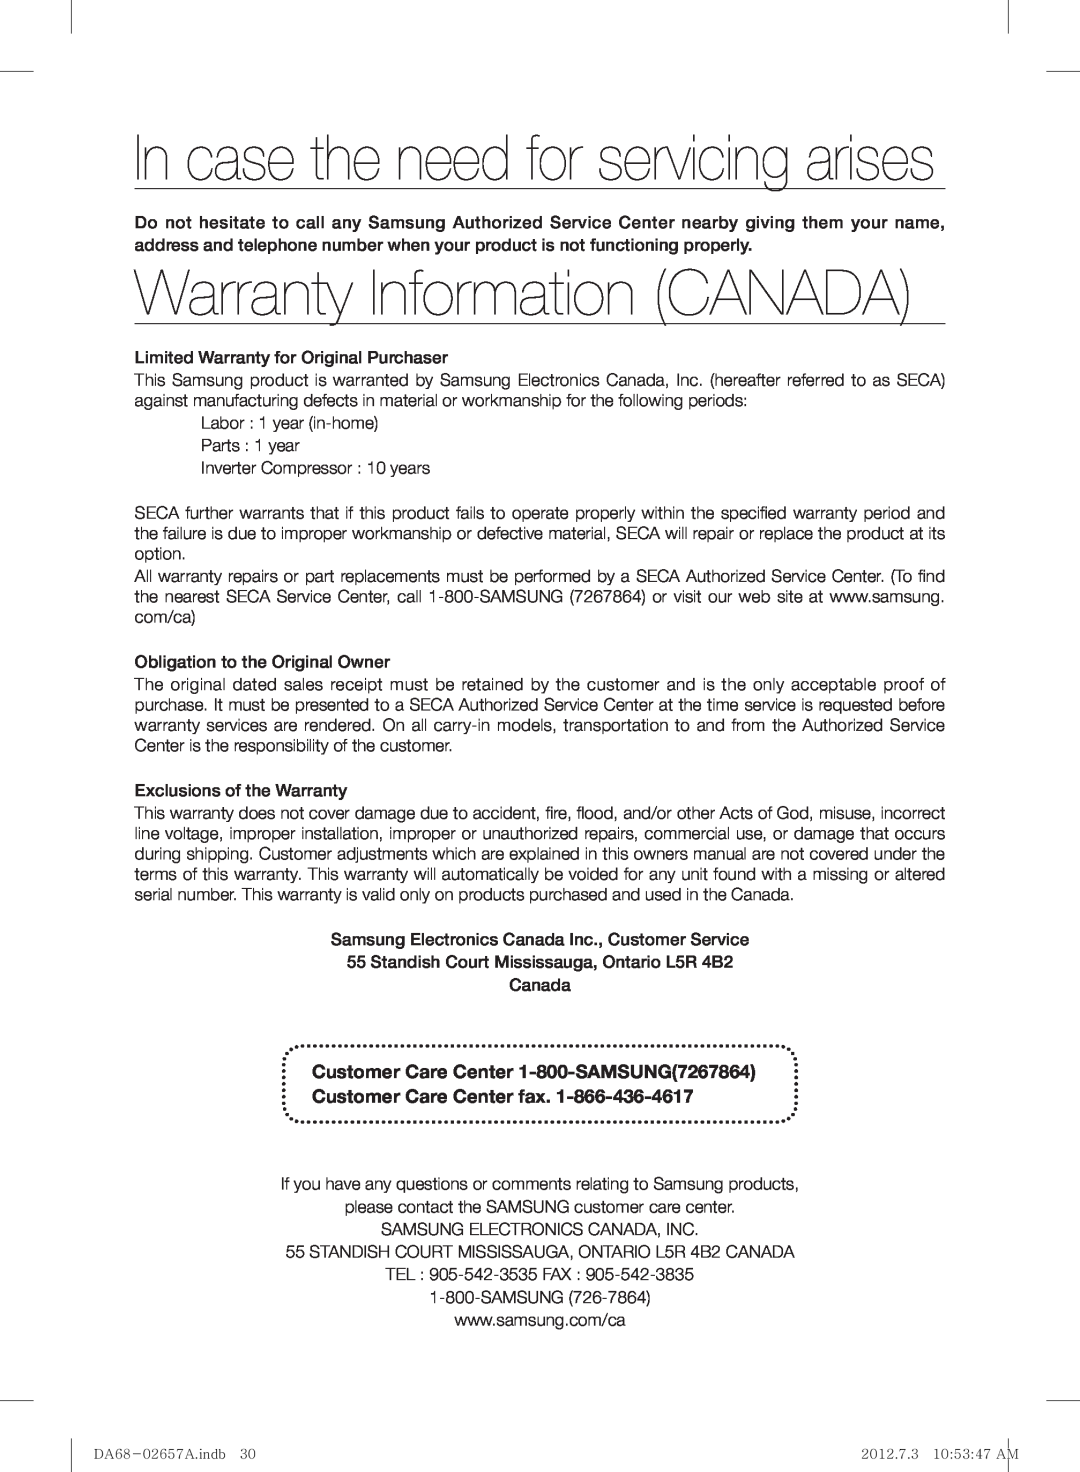 Samsung RF221NCTABC Warranty Information CANADA, Customer Care Center 1-800-SAMSUNG7267864 Customer Care Center fax 